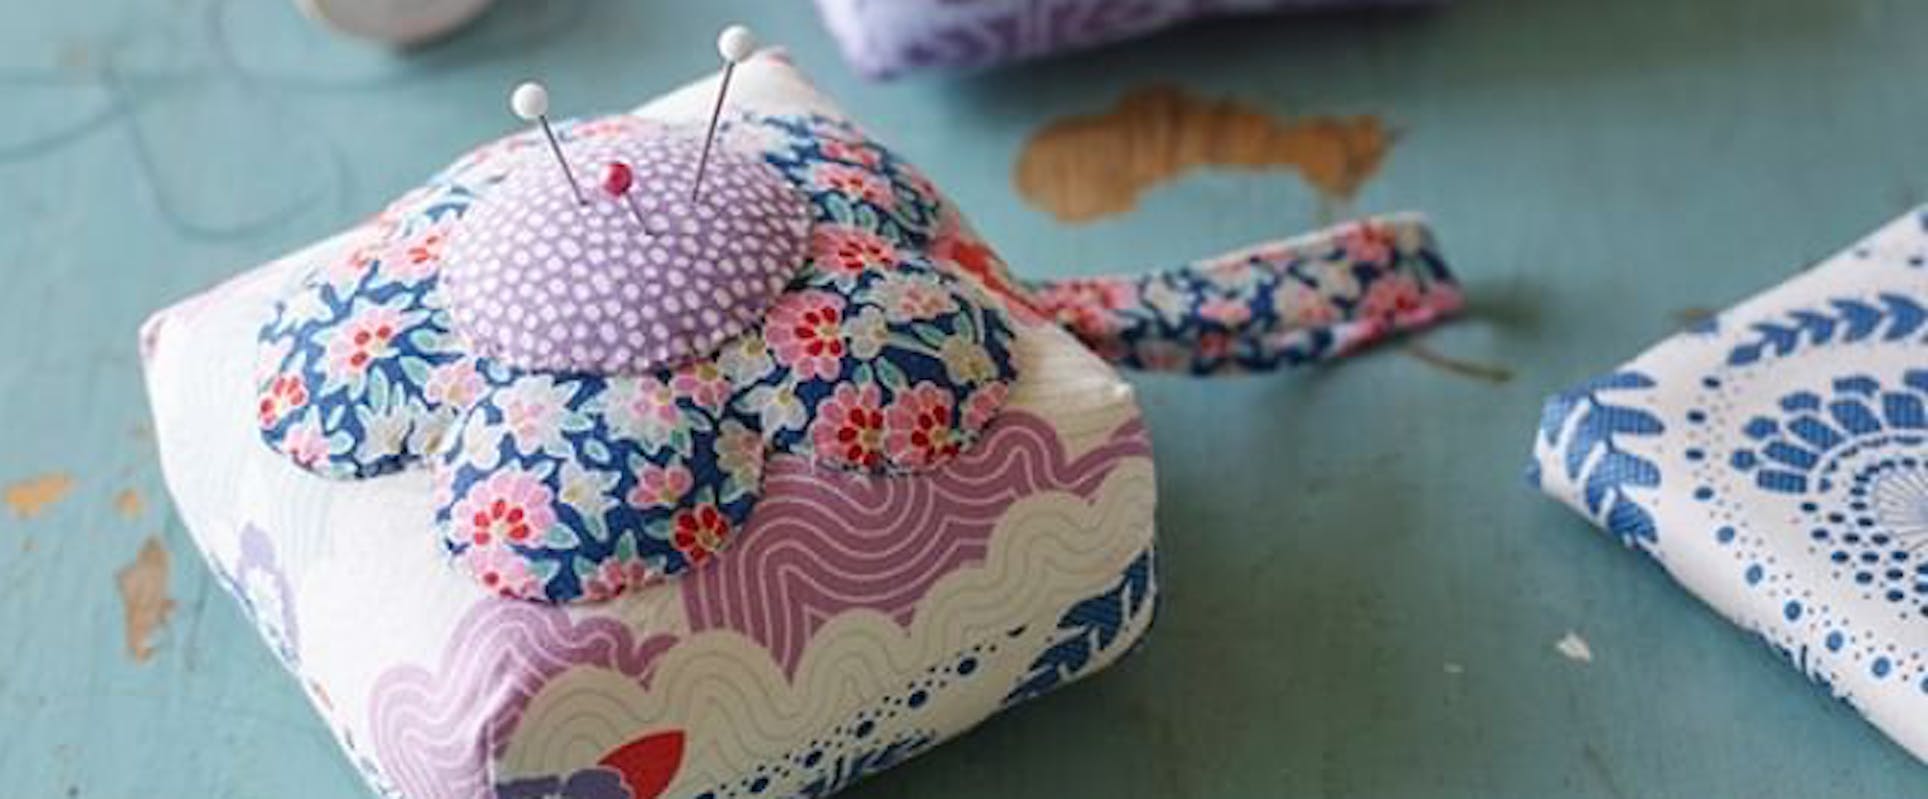 Hobby Gift Knitting Bag Sewing Craft Bags - Choice of Designs - Storage Pins